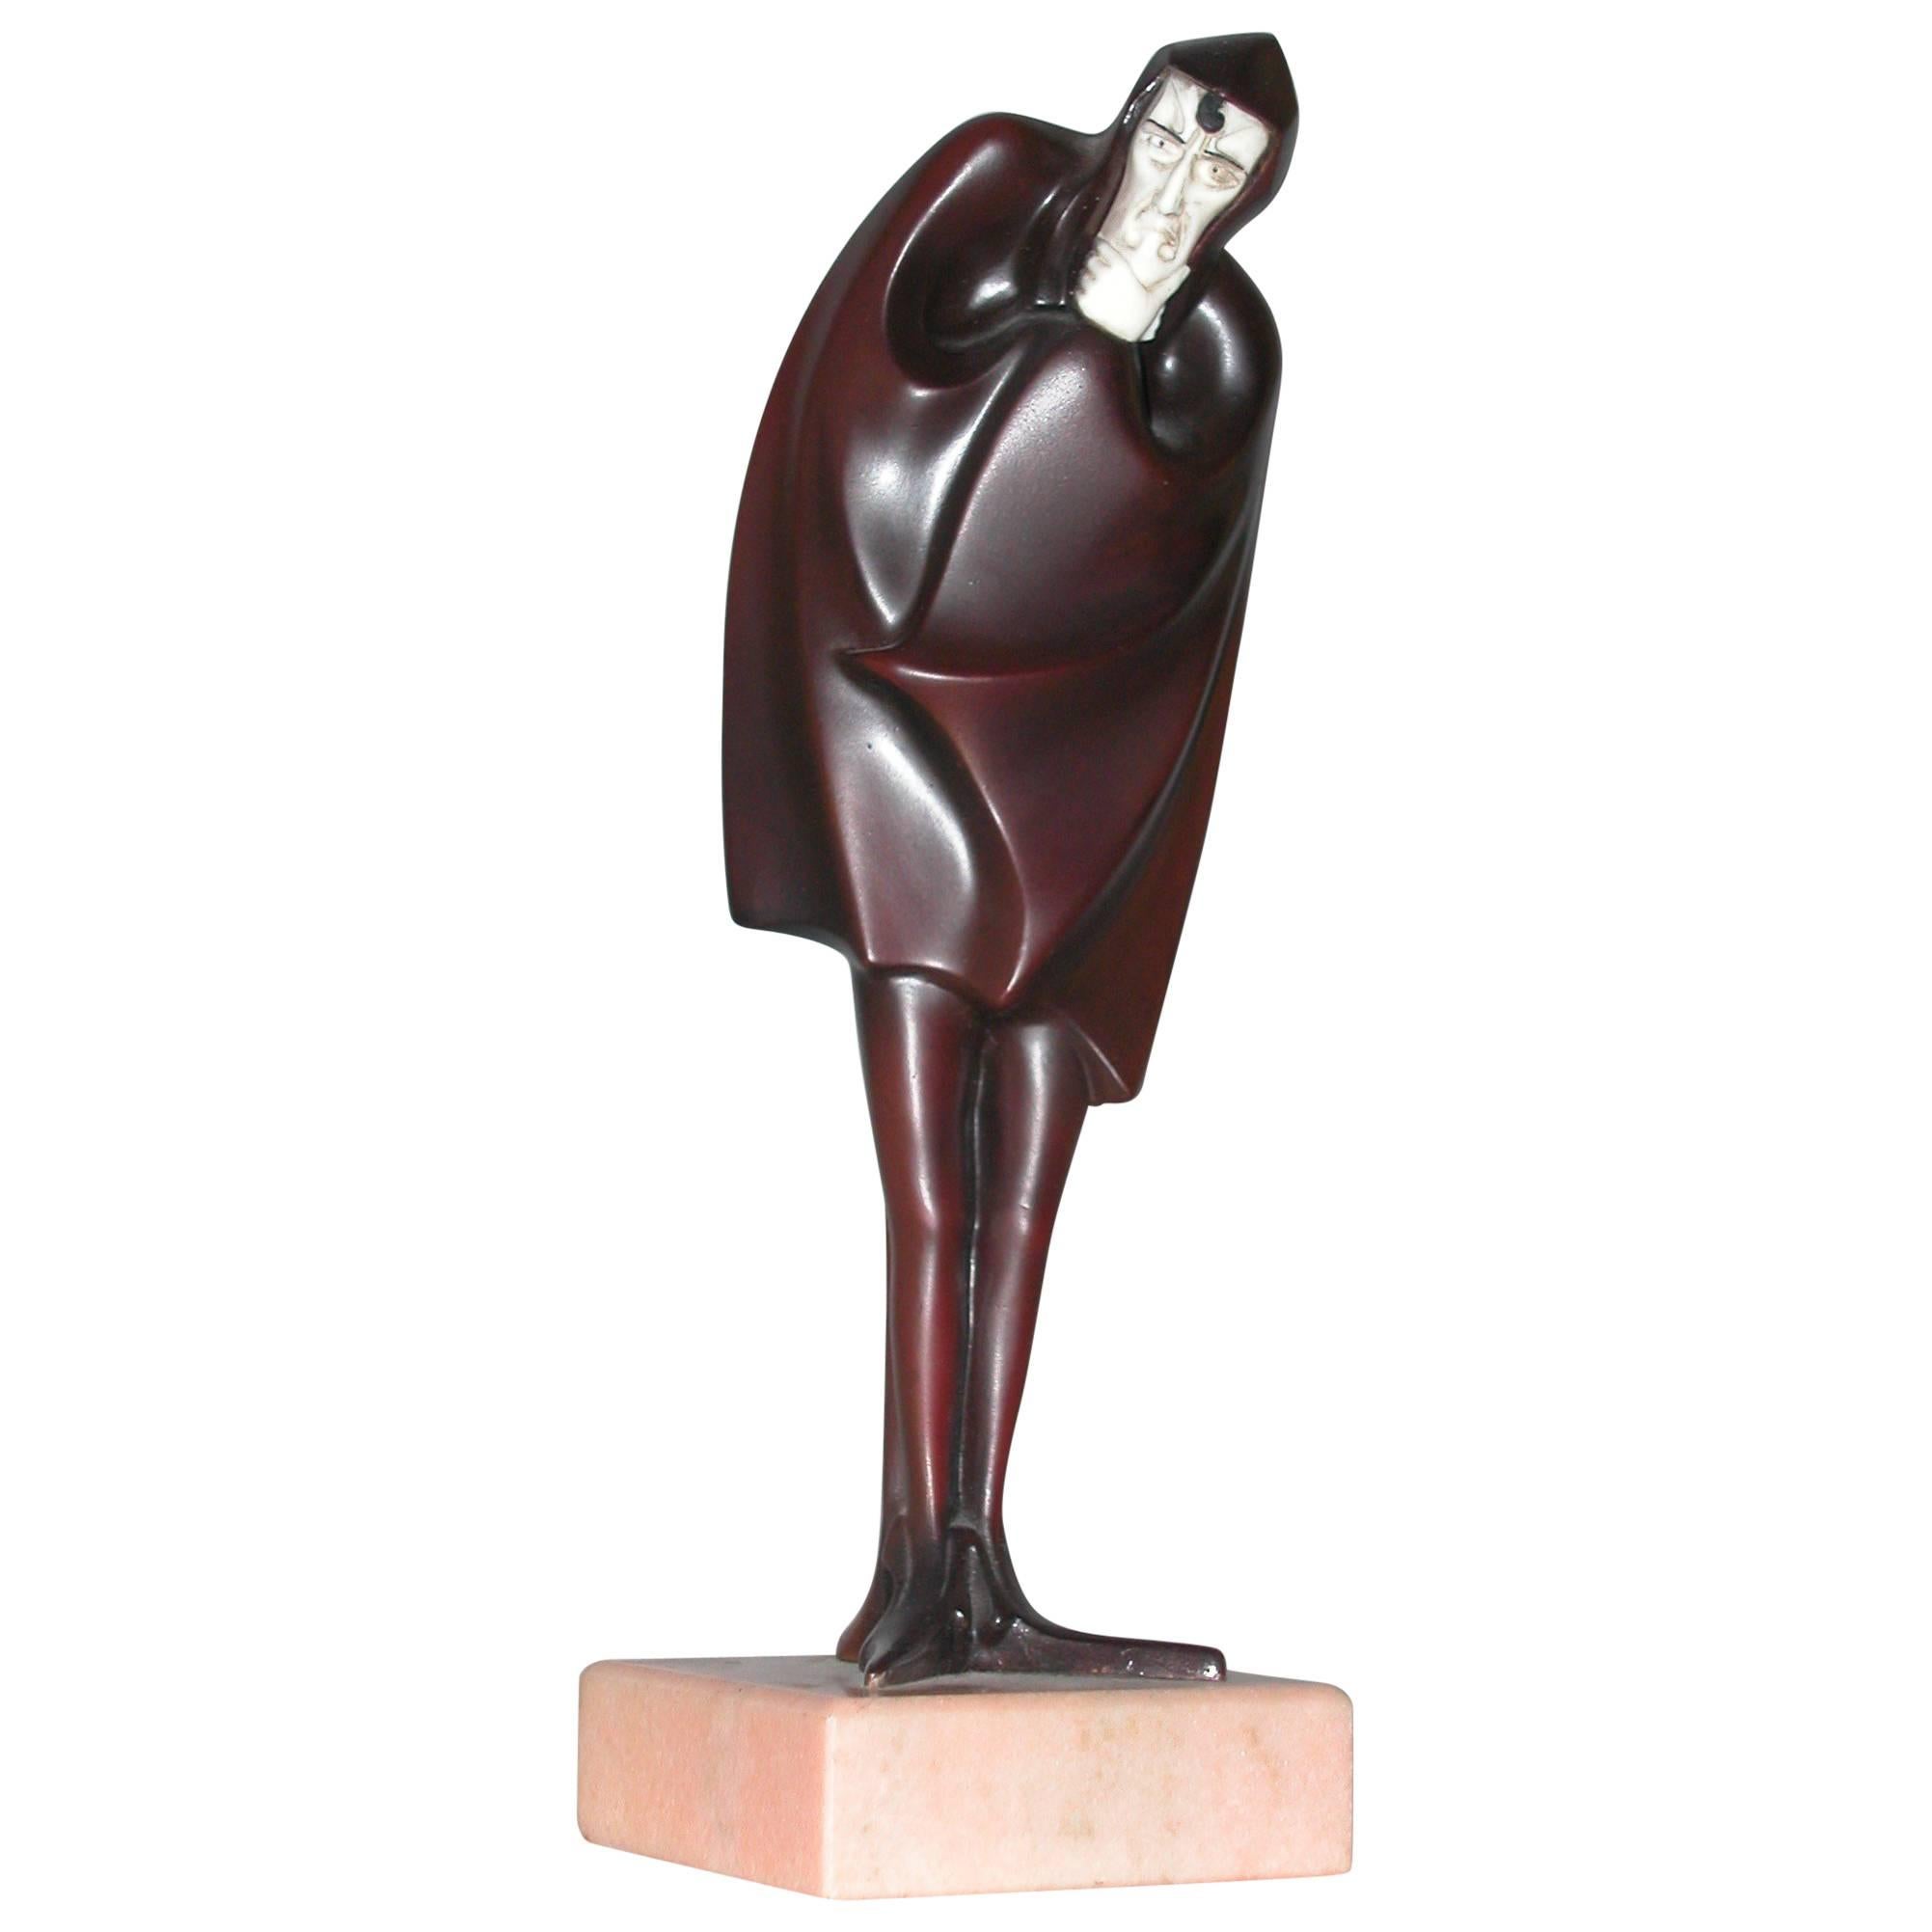 Roland Paris, Statuette Art Deco Period 'Mephistopheles'